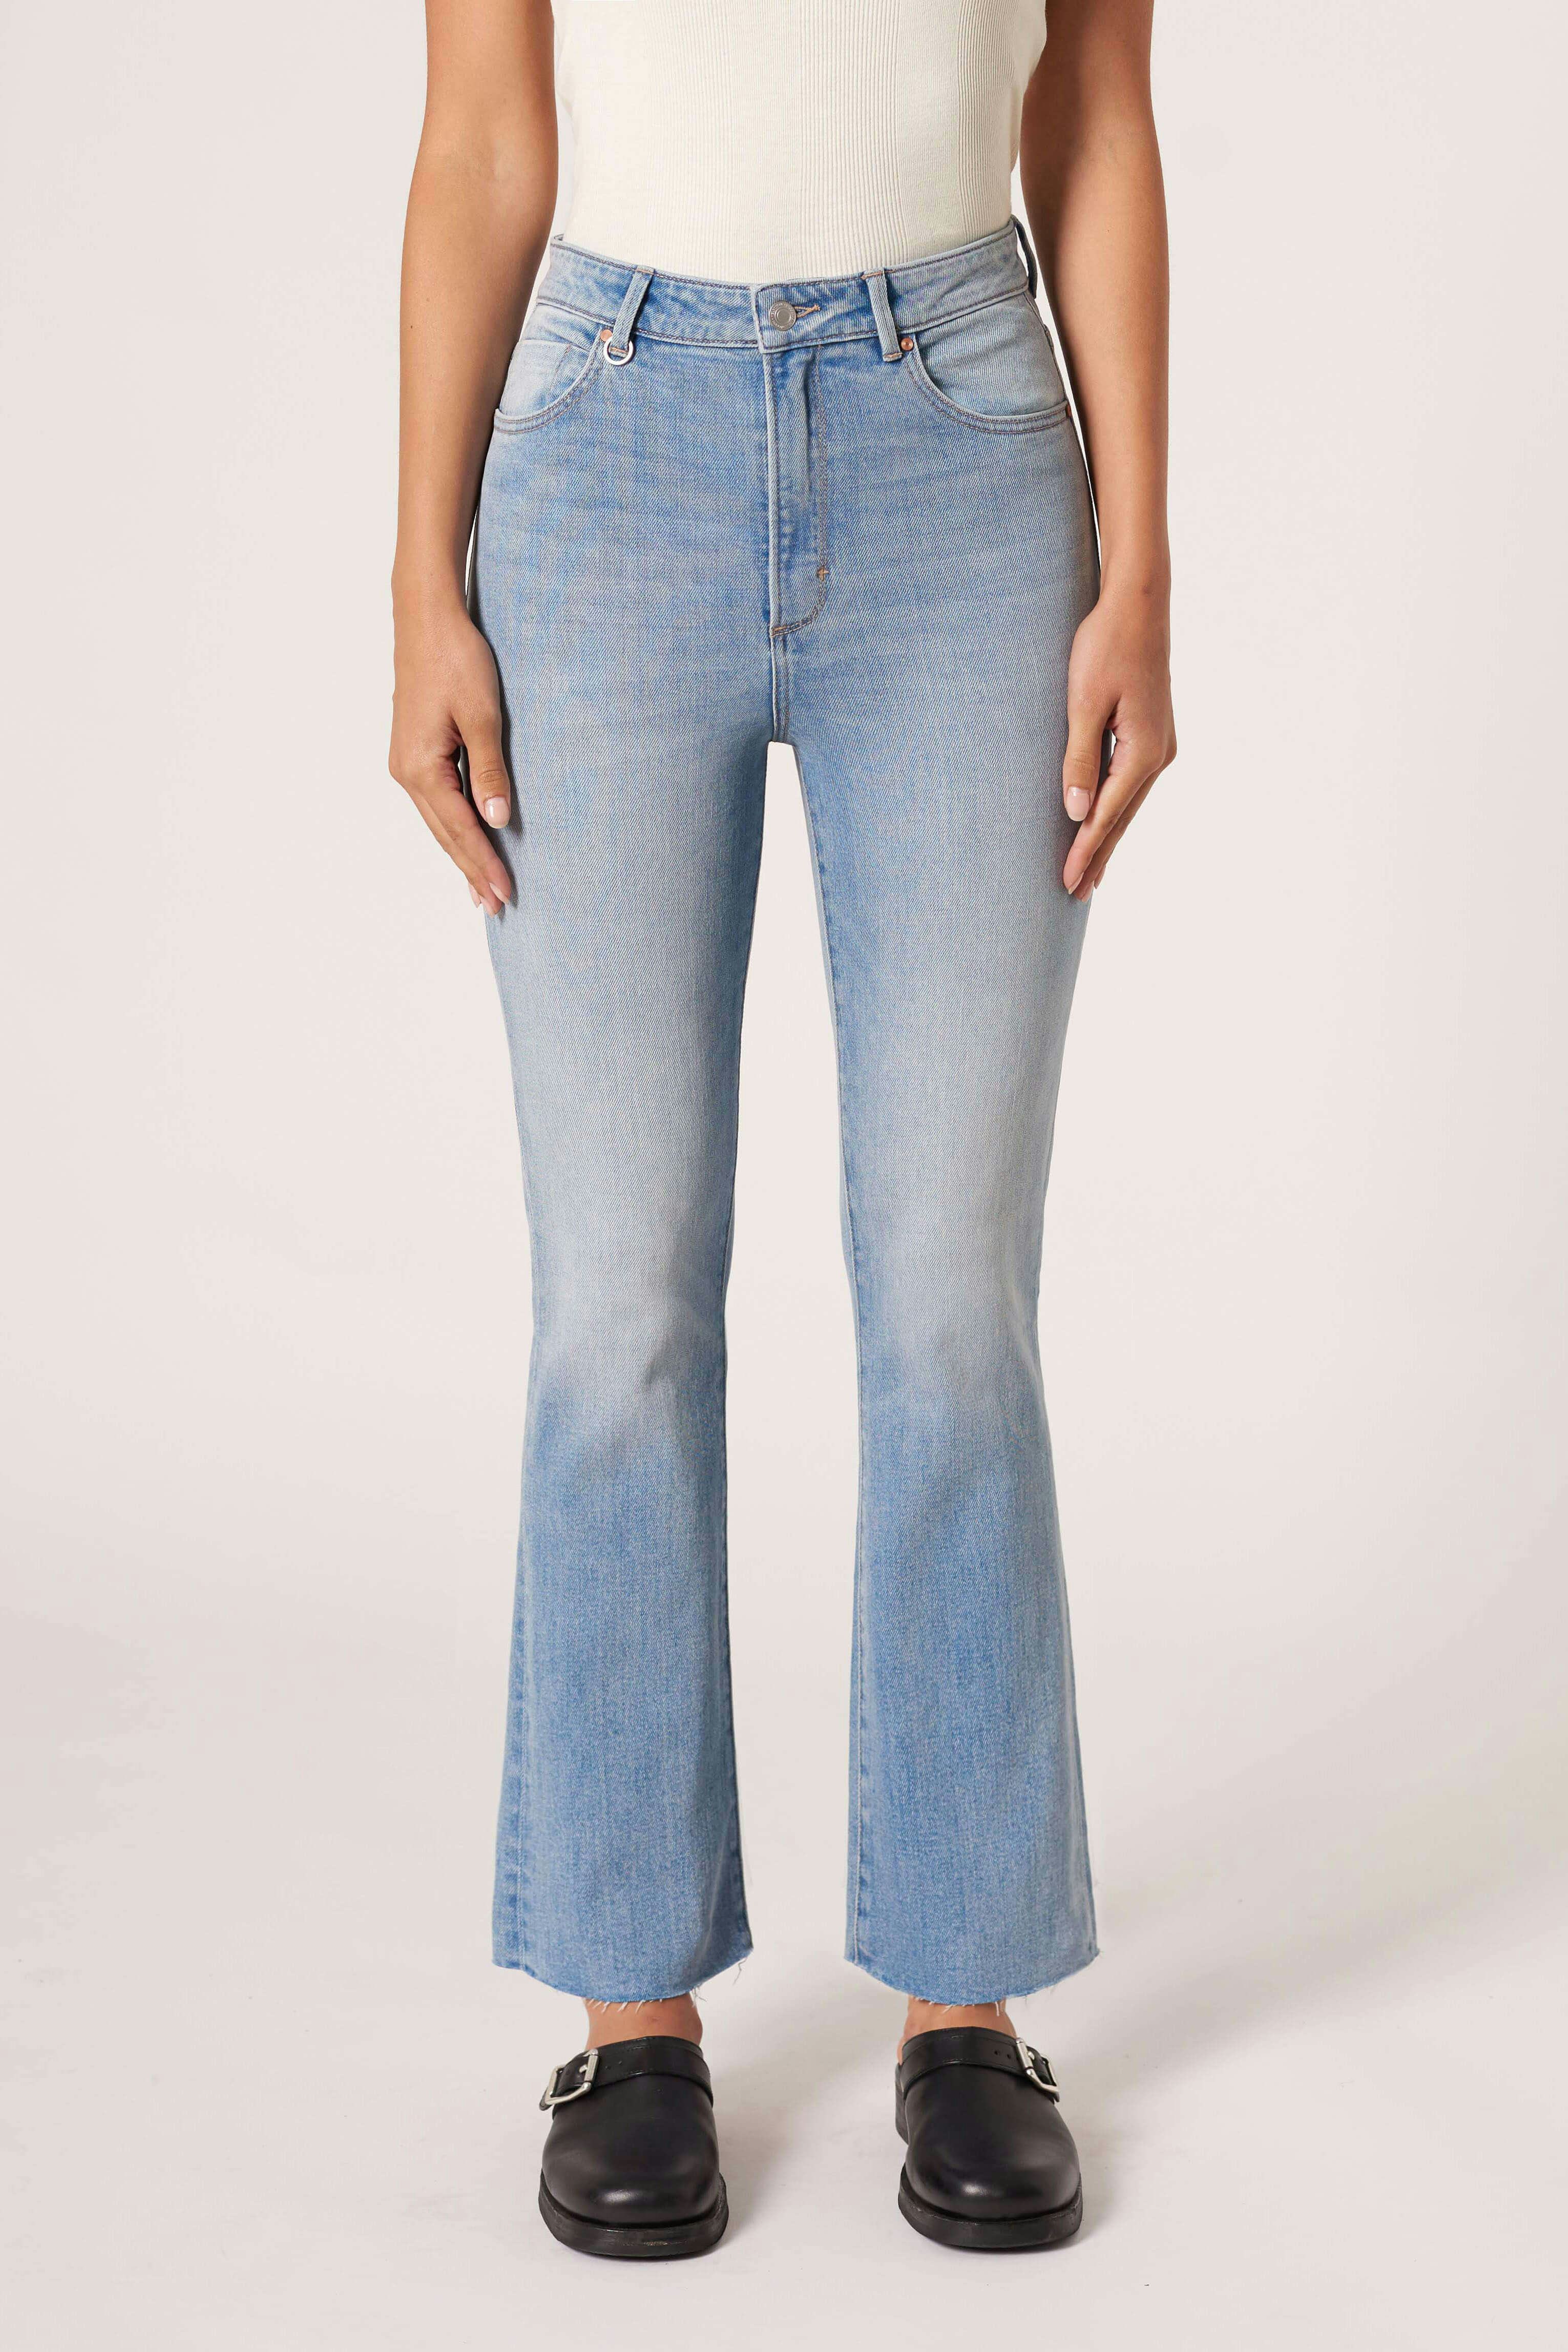 Twiggy Crop Premium Stretch - Sirens Neuw light lightblue womens-jeans 